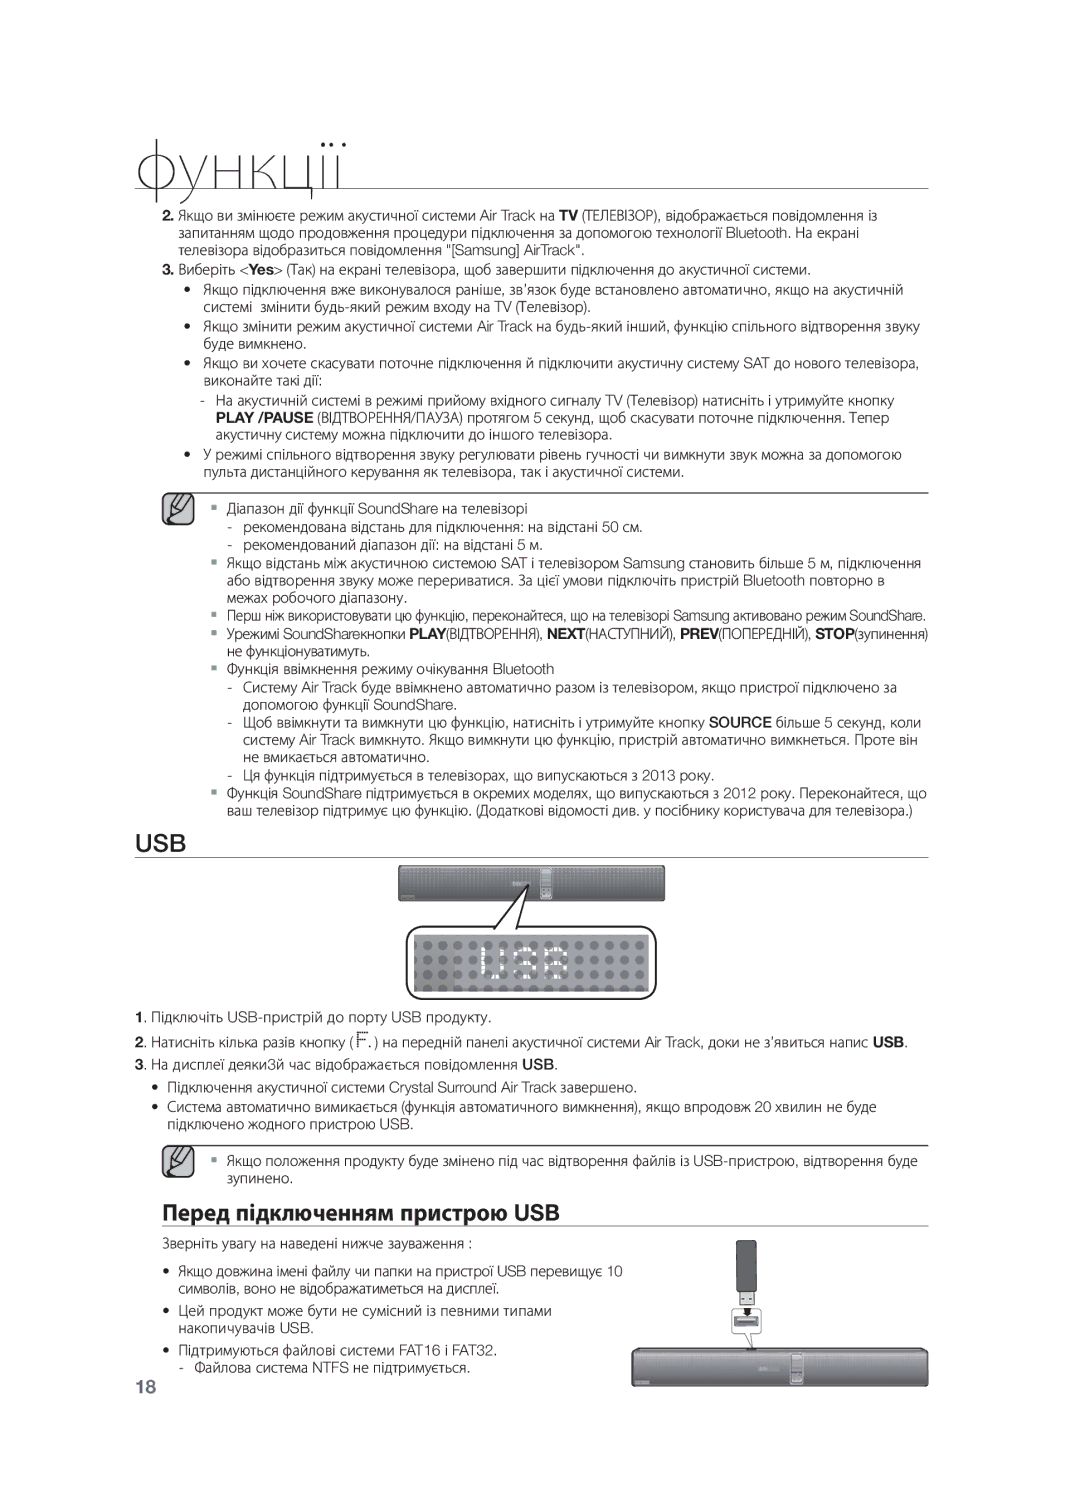 Samsung HW-F750/RU manual Usb, Перед підключенням пристрою USB 